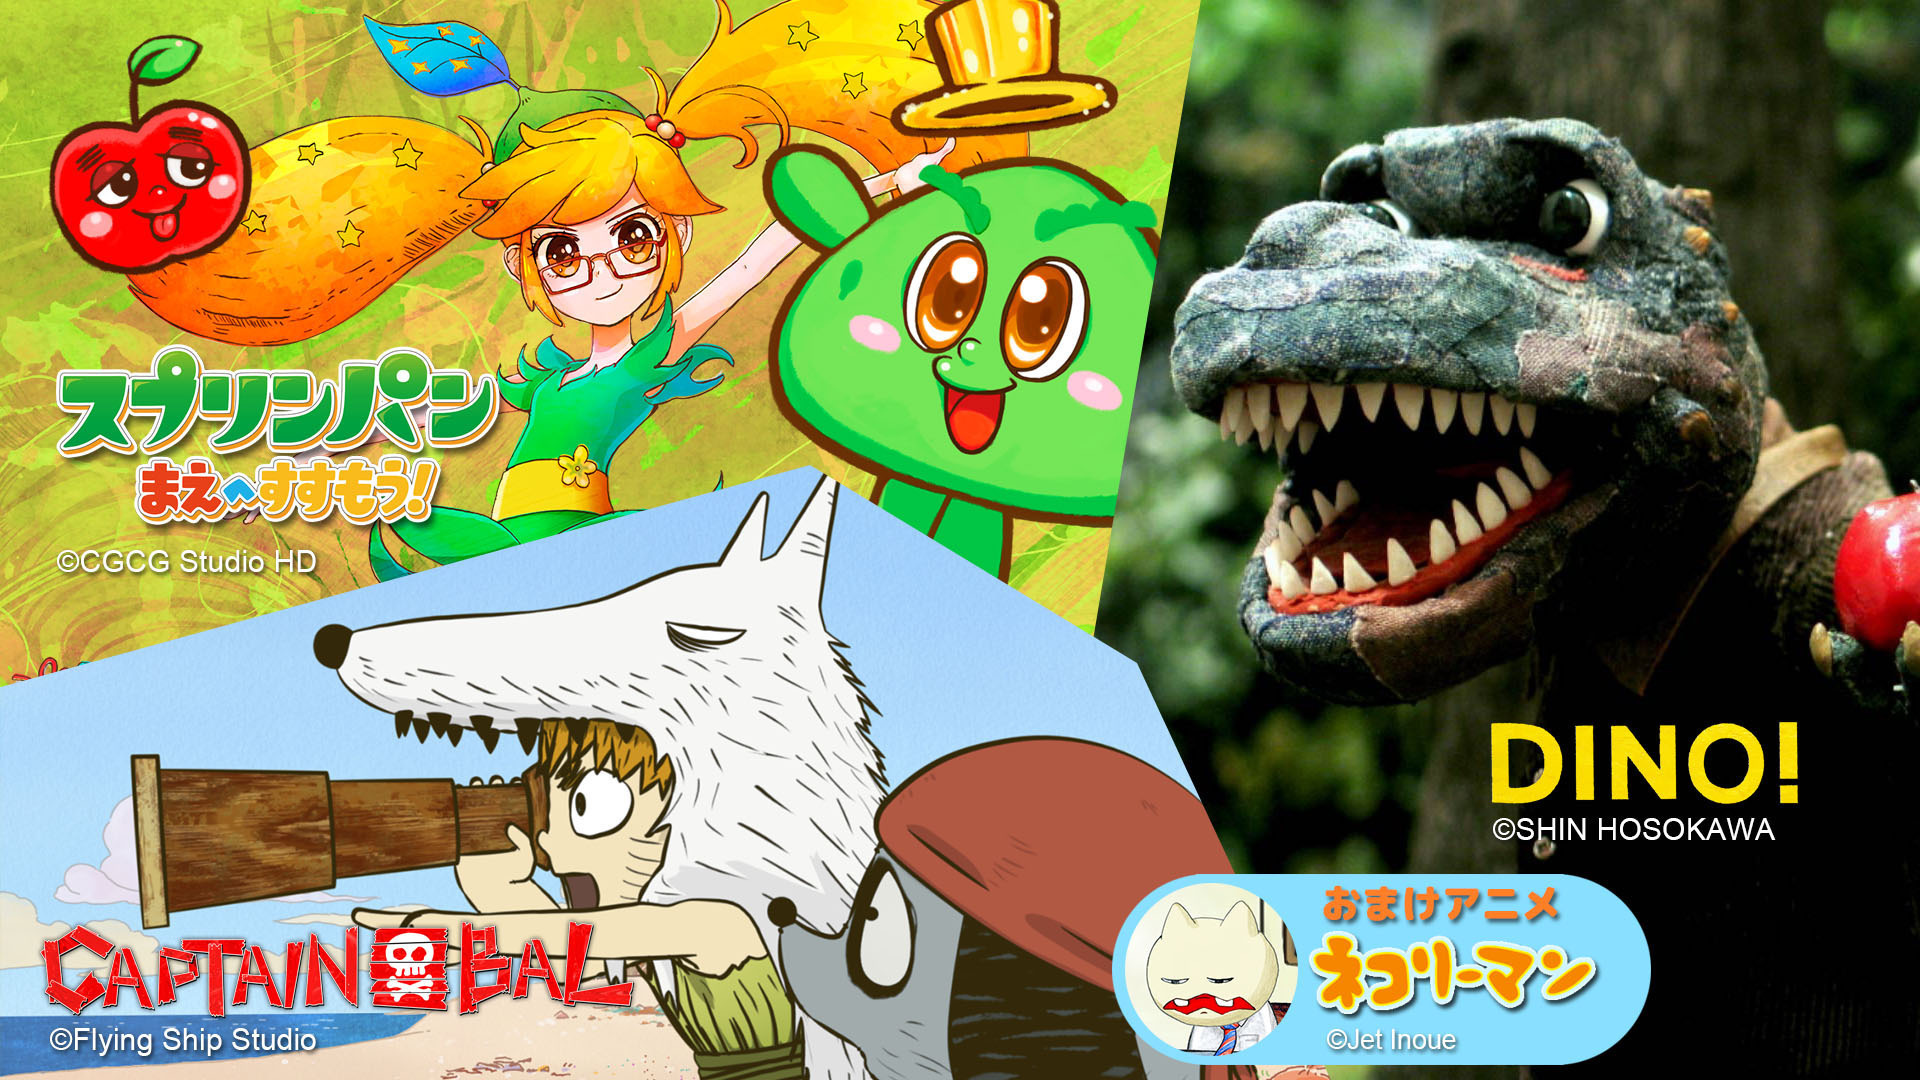 Lively and fun 3 anime program [DINO!][Captain Bal] [Spring Pan Let's Go!]